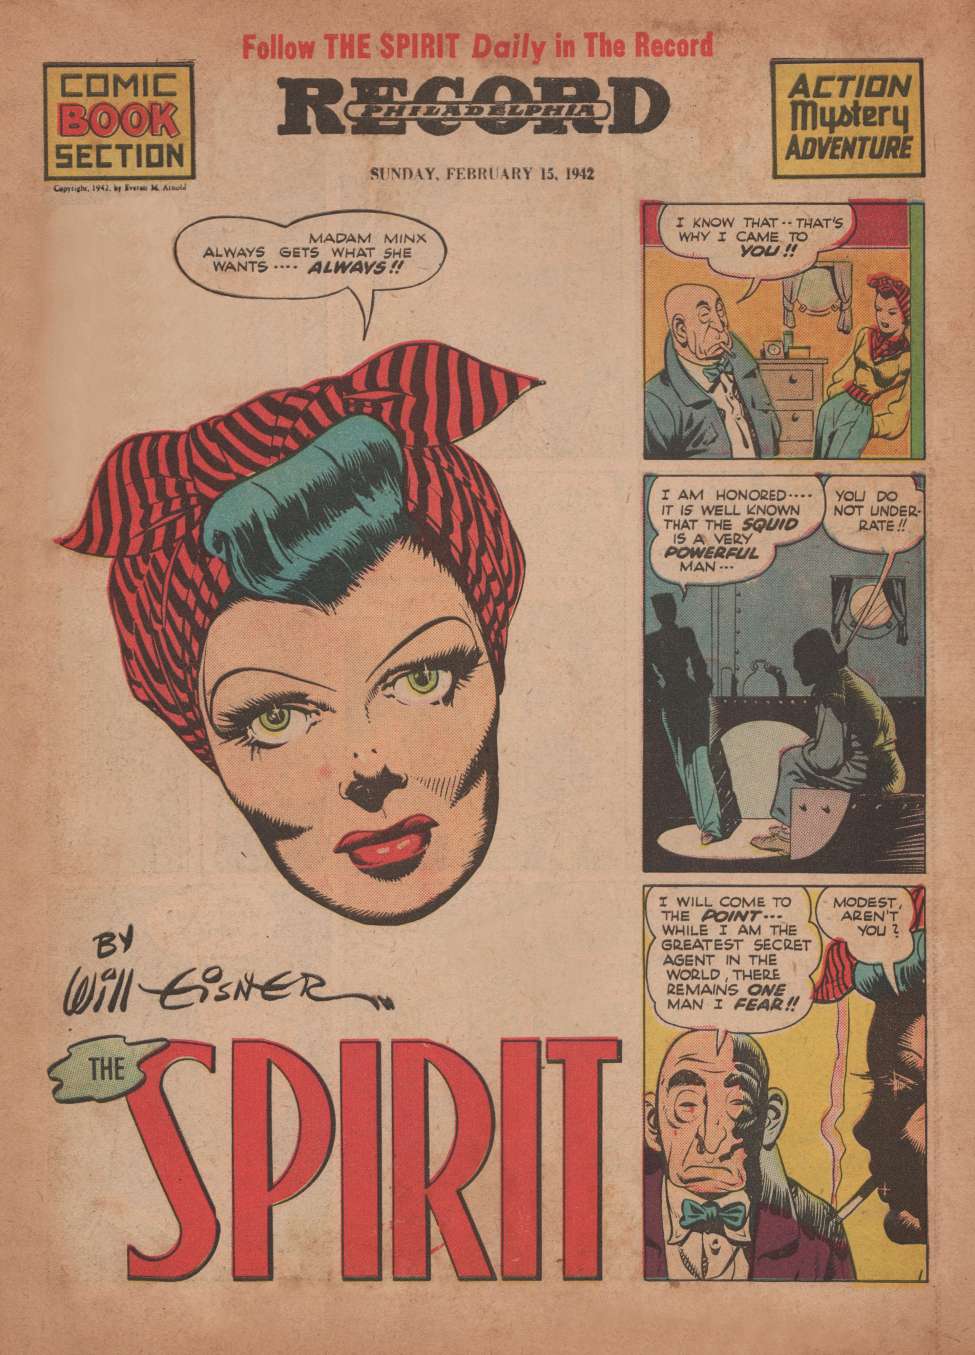 Comic Book Cover For The Spirit (1942-02-15) - Philadelphia Record